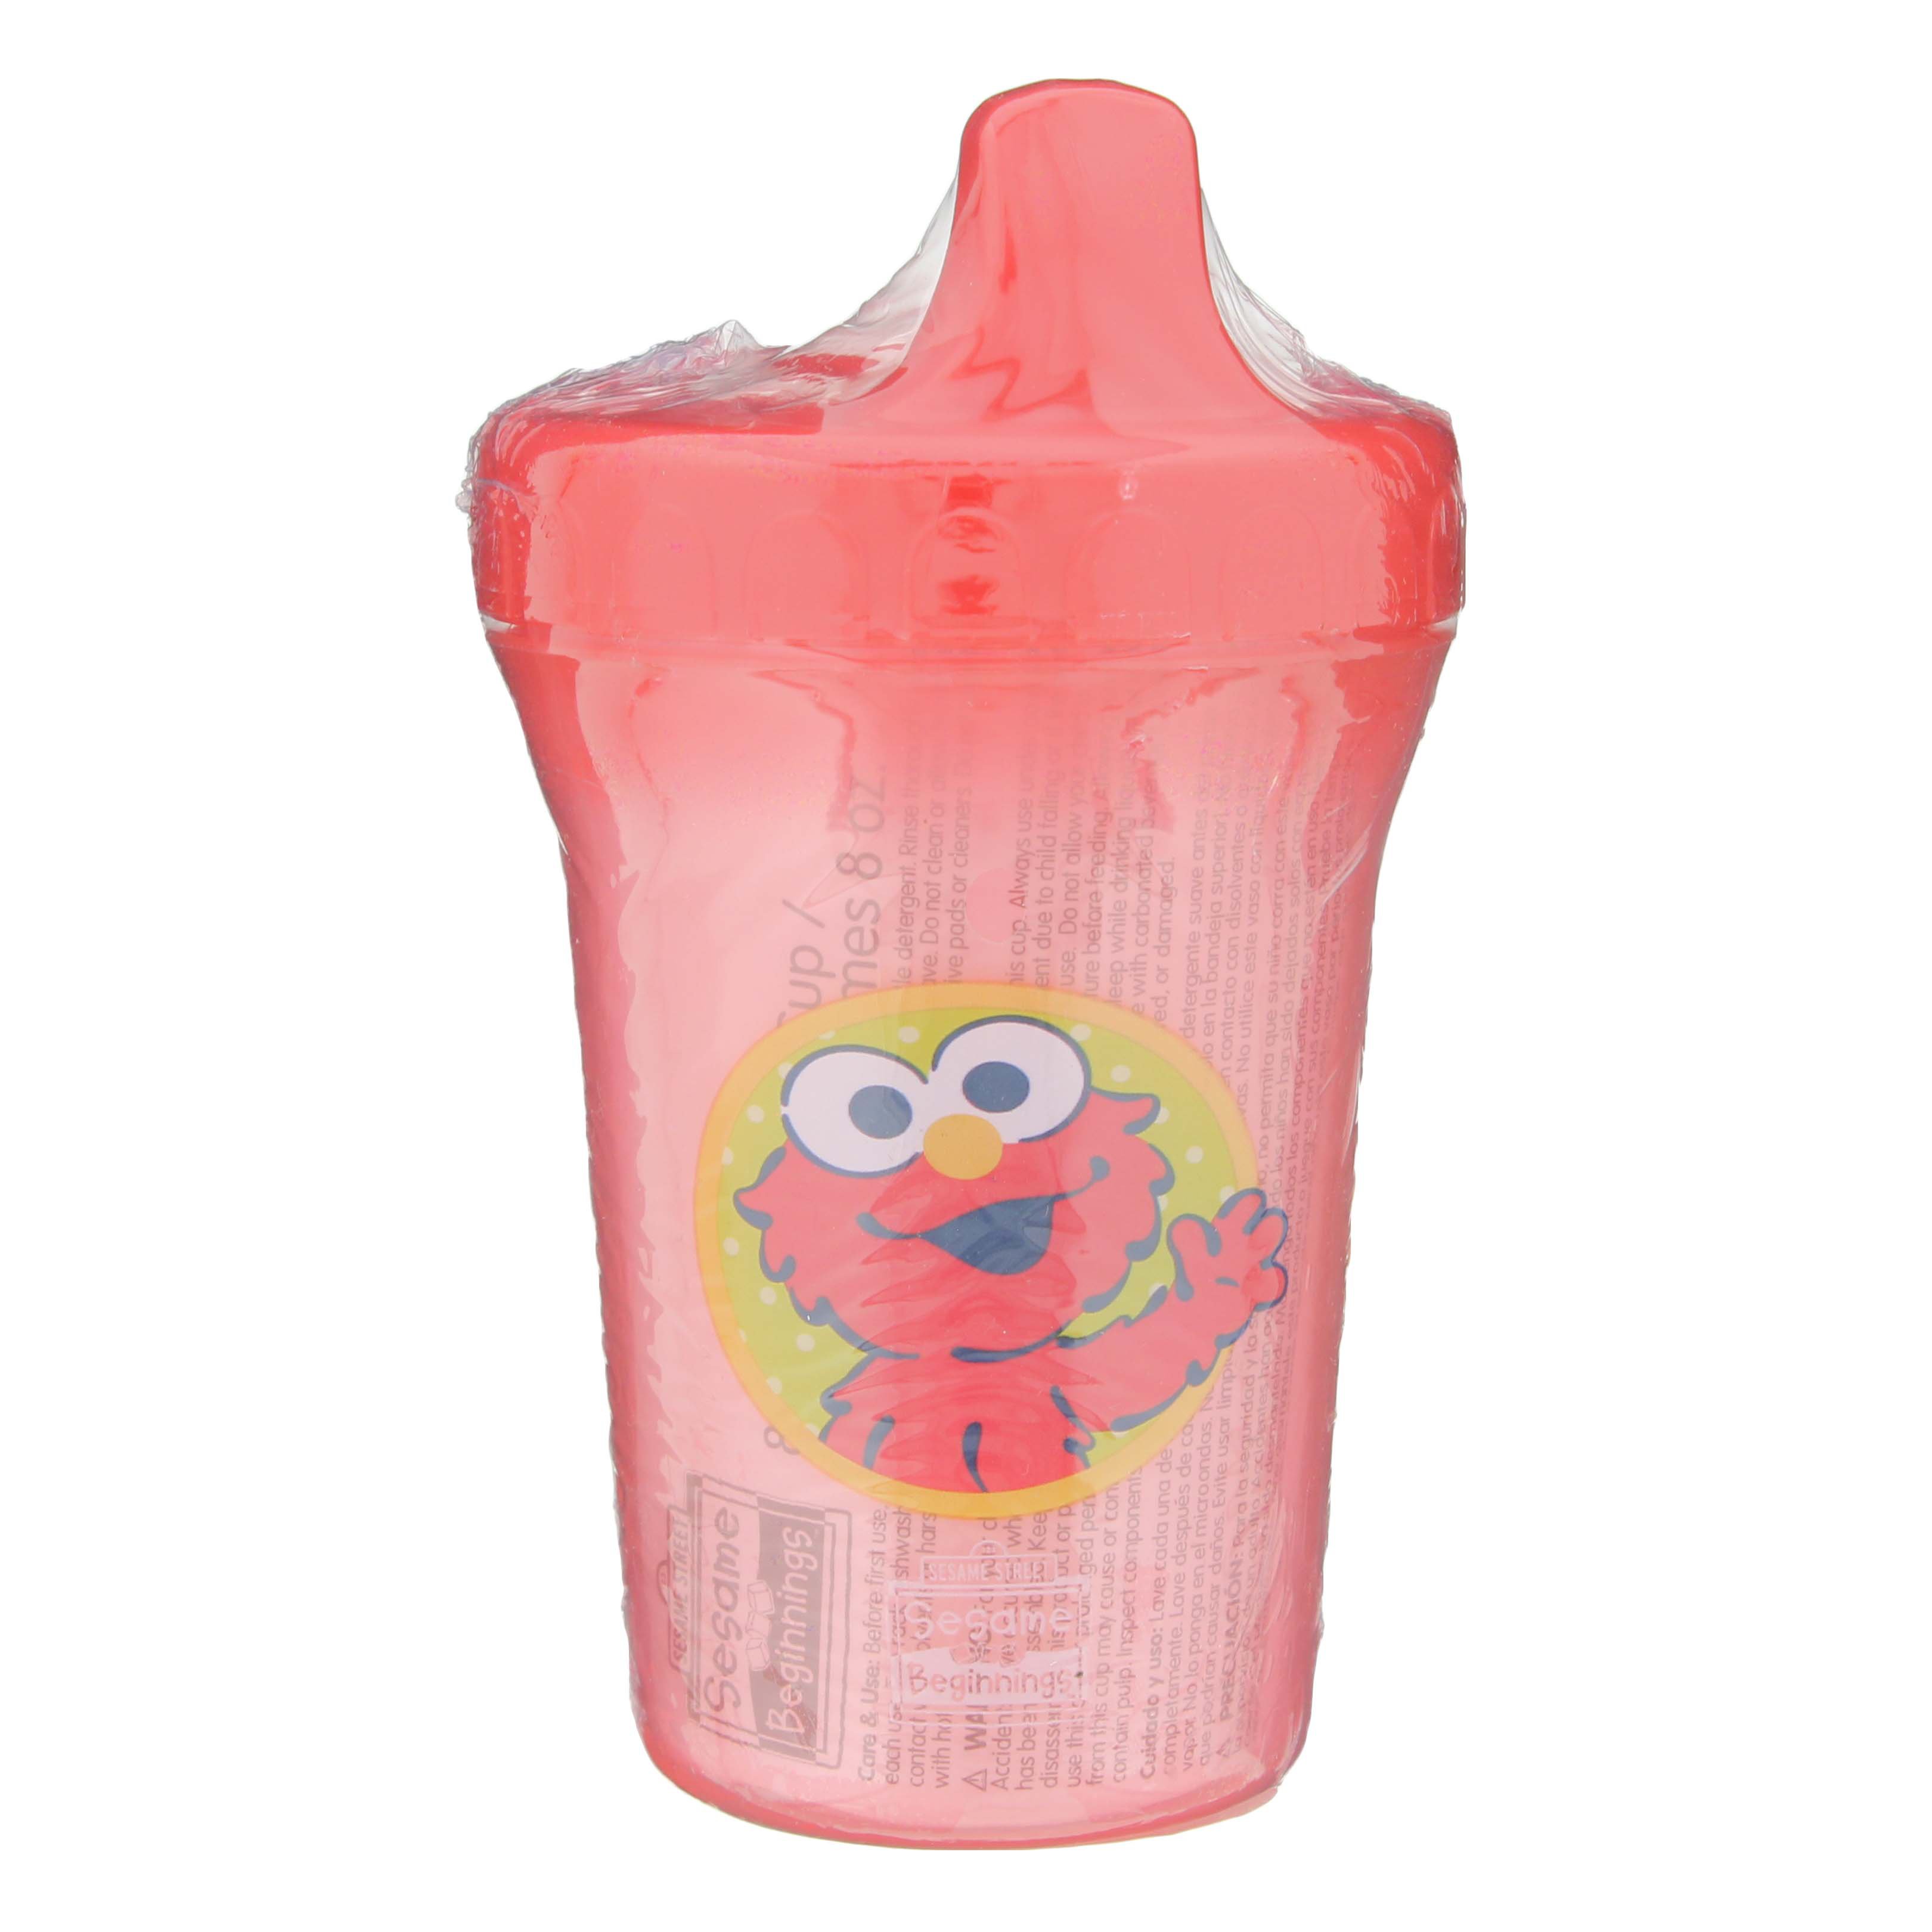 Sesame Street Elmo Trainer Cup - 7 oz. (Munchkin)